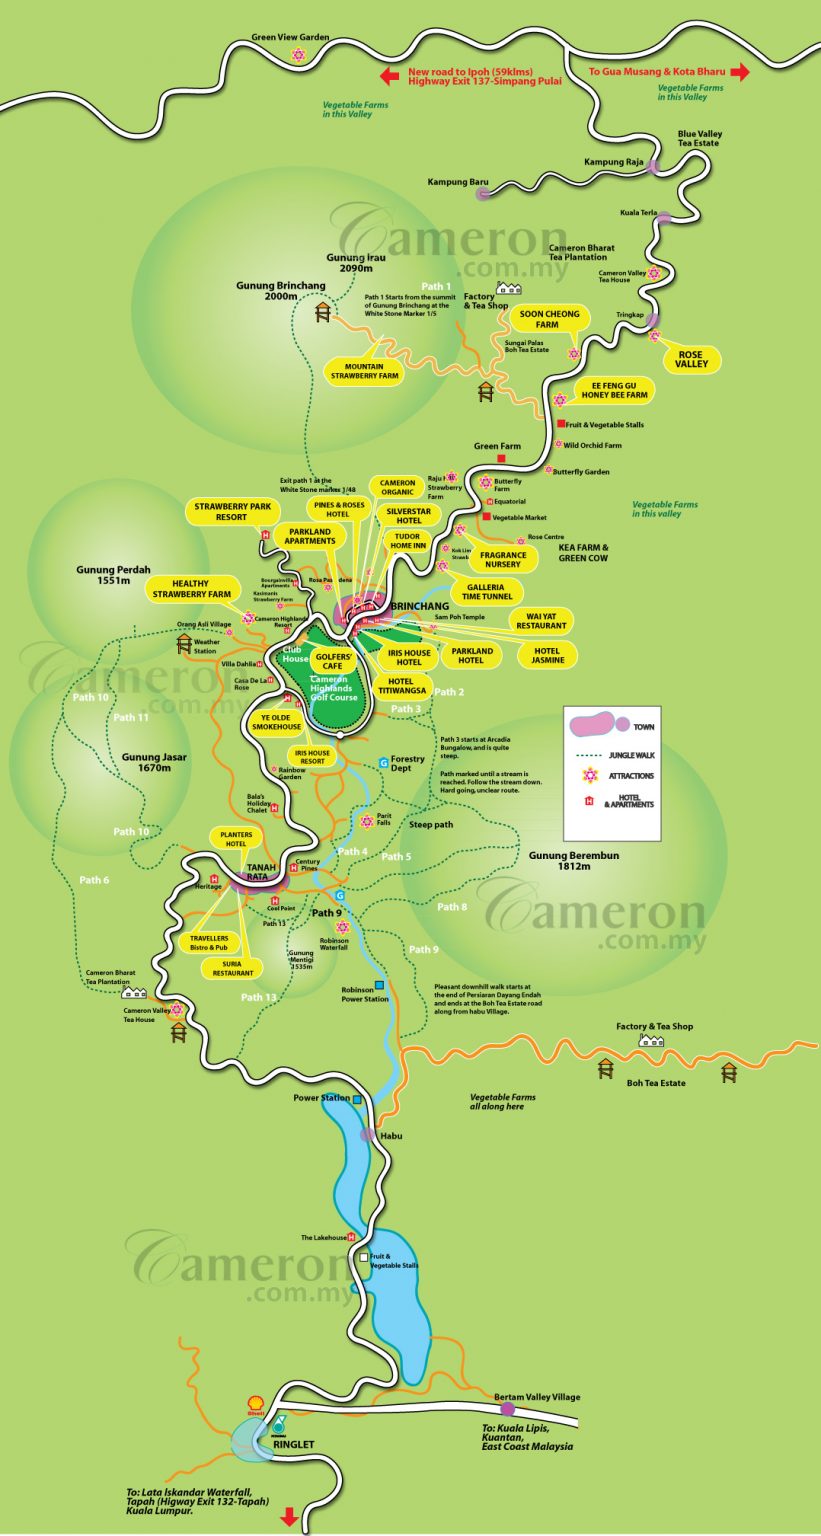 cameron highlands map